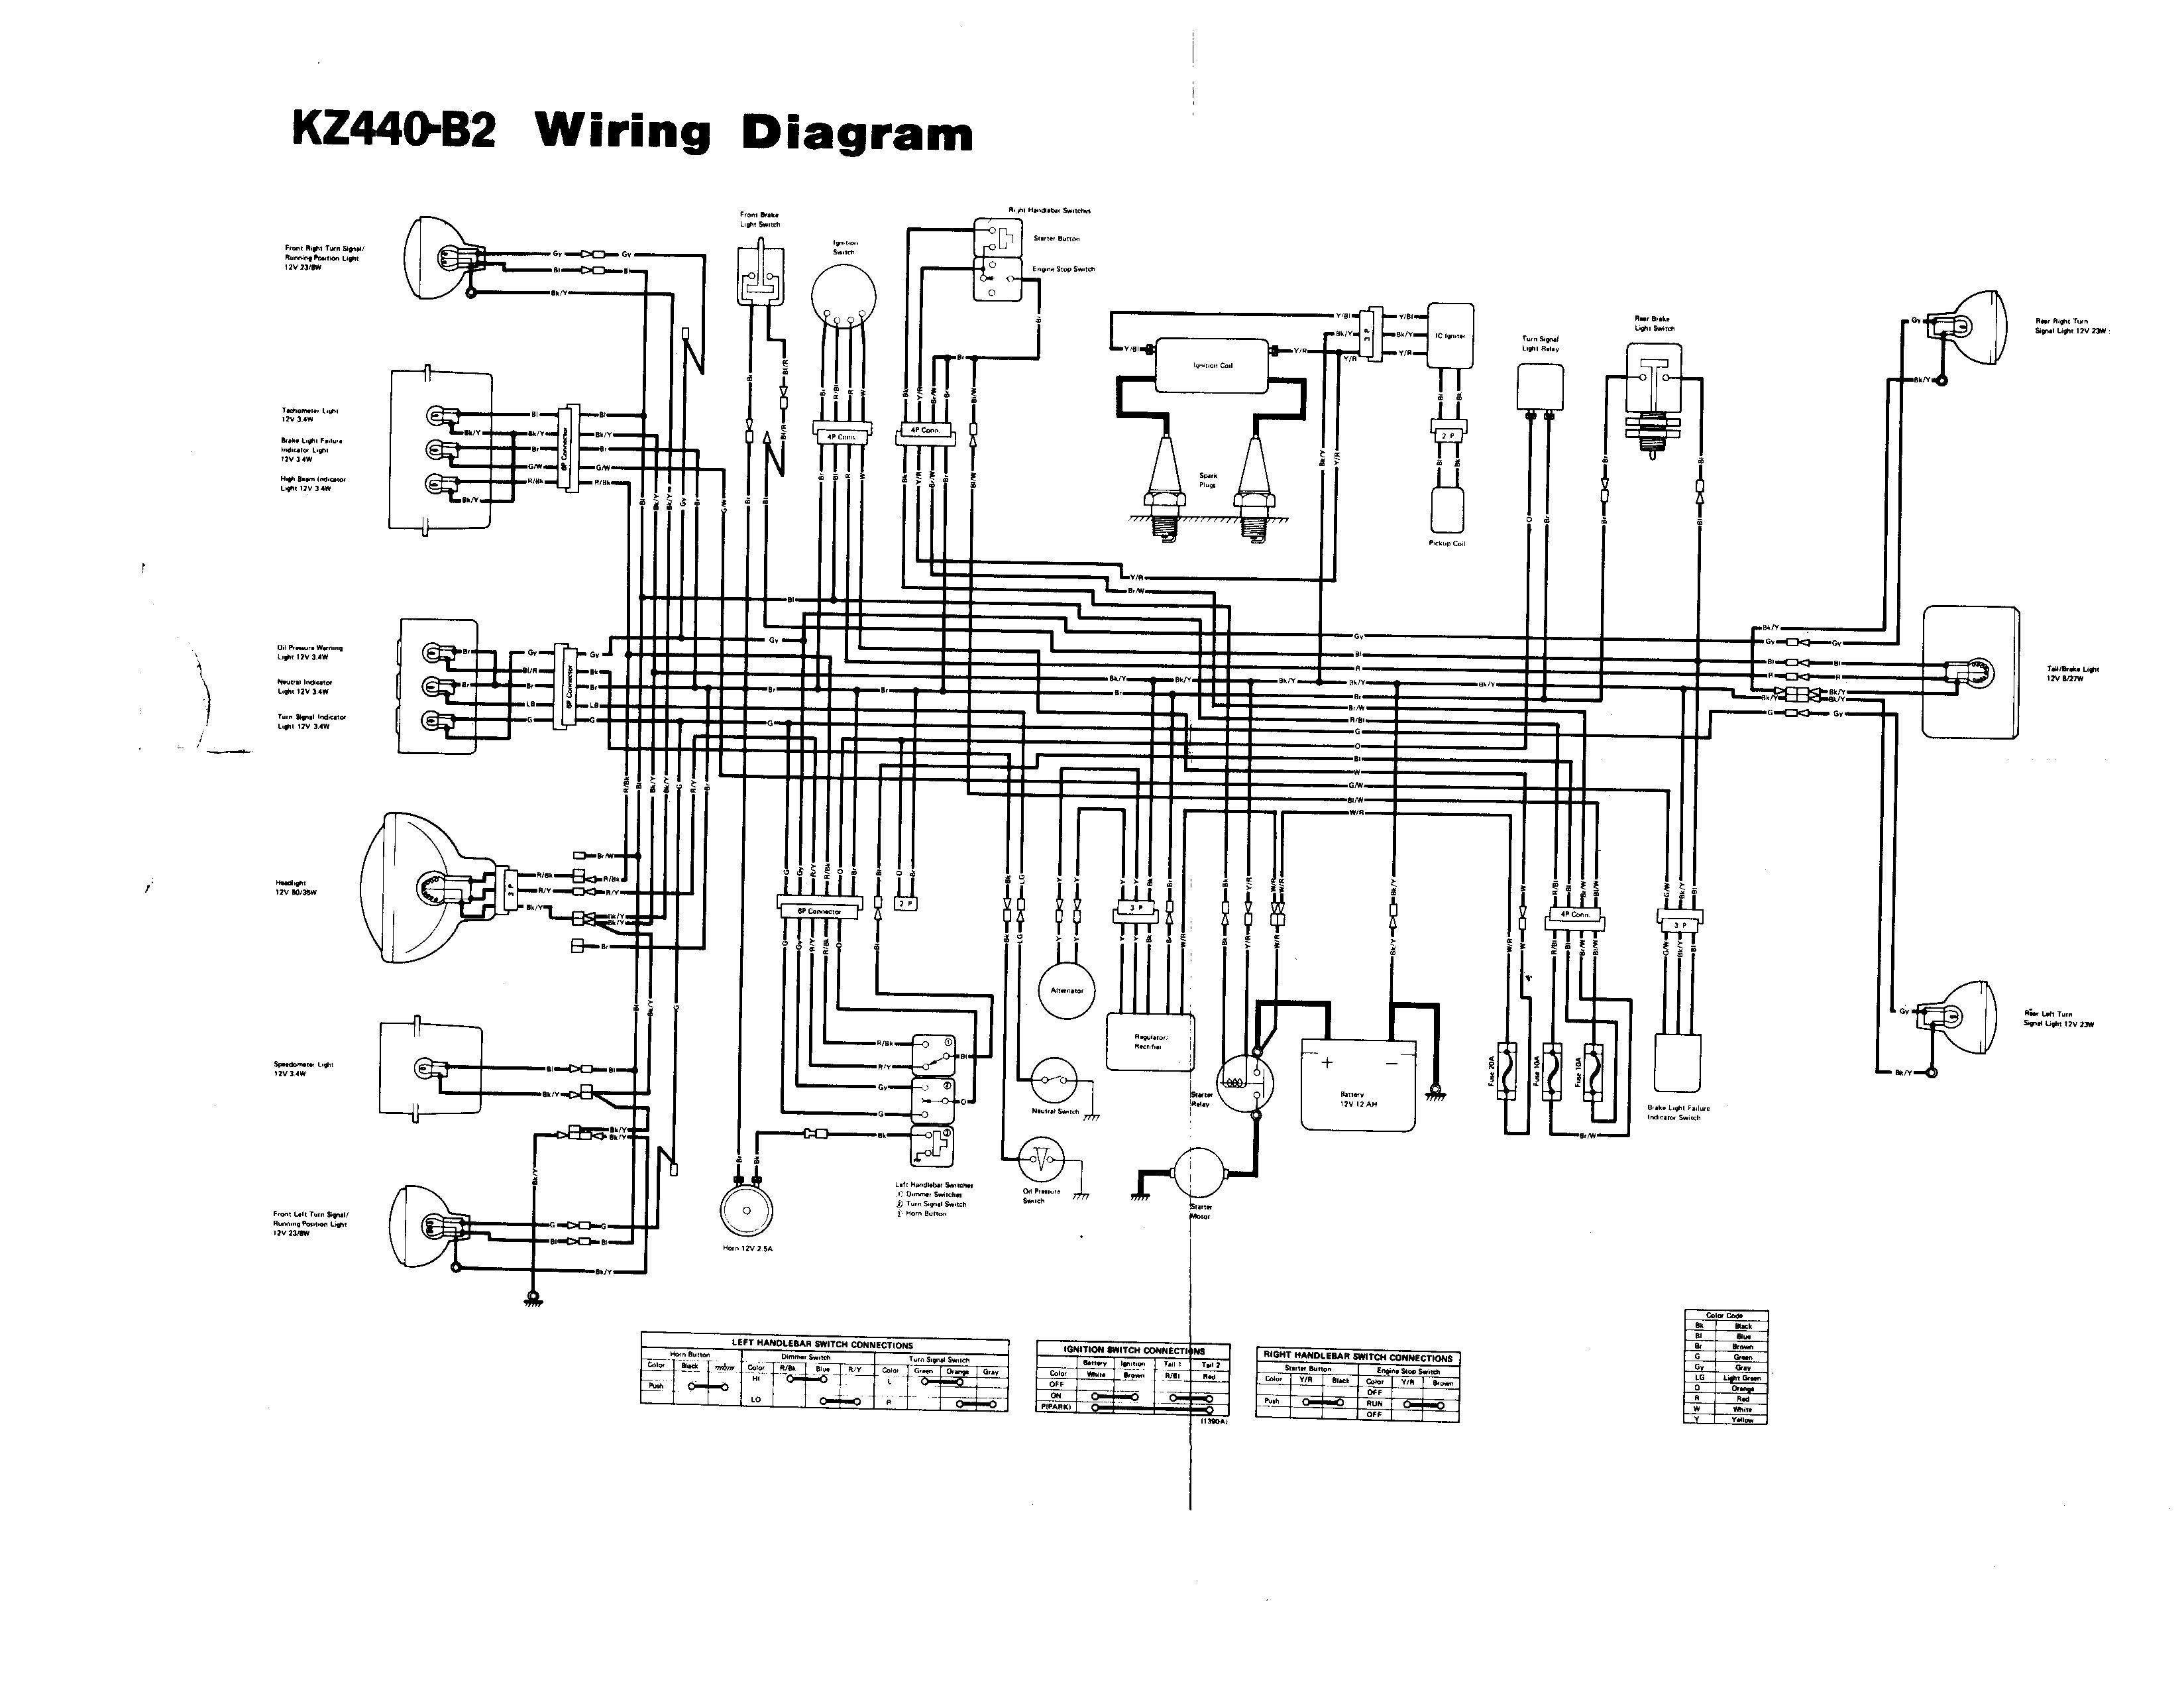 Wiring Diagram for to 35 Ferguson Grafik Hyster forklift Wiring Diagram E60 Full Hd Version Of Wiring Diagram for to 35 Ferguson